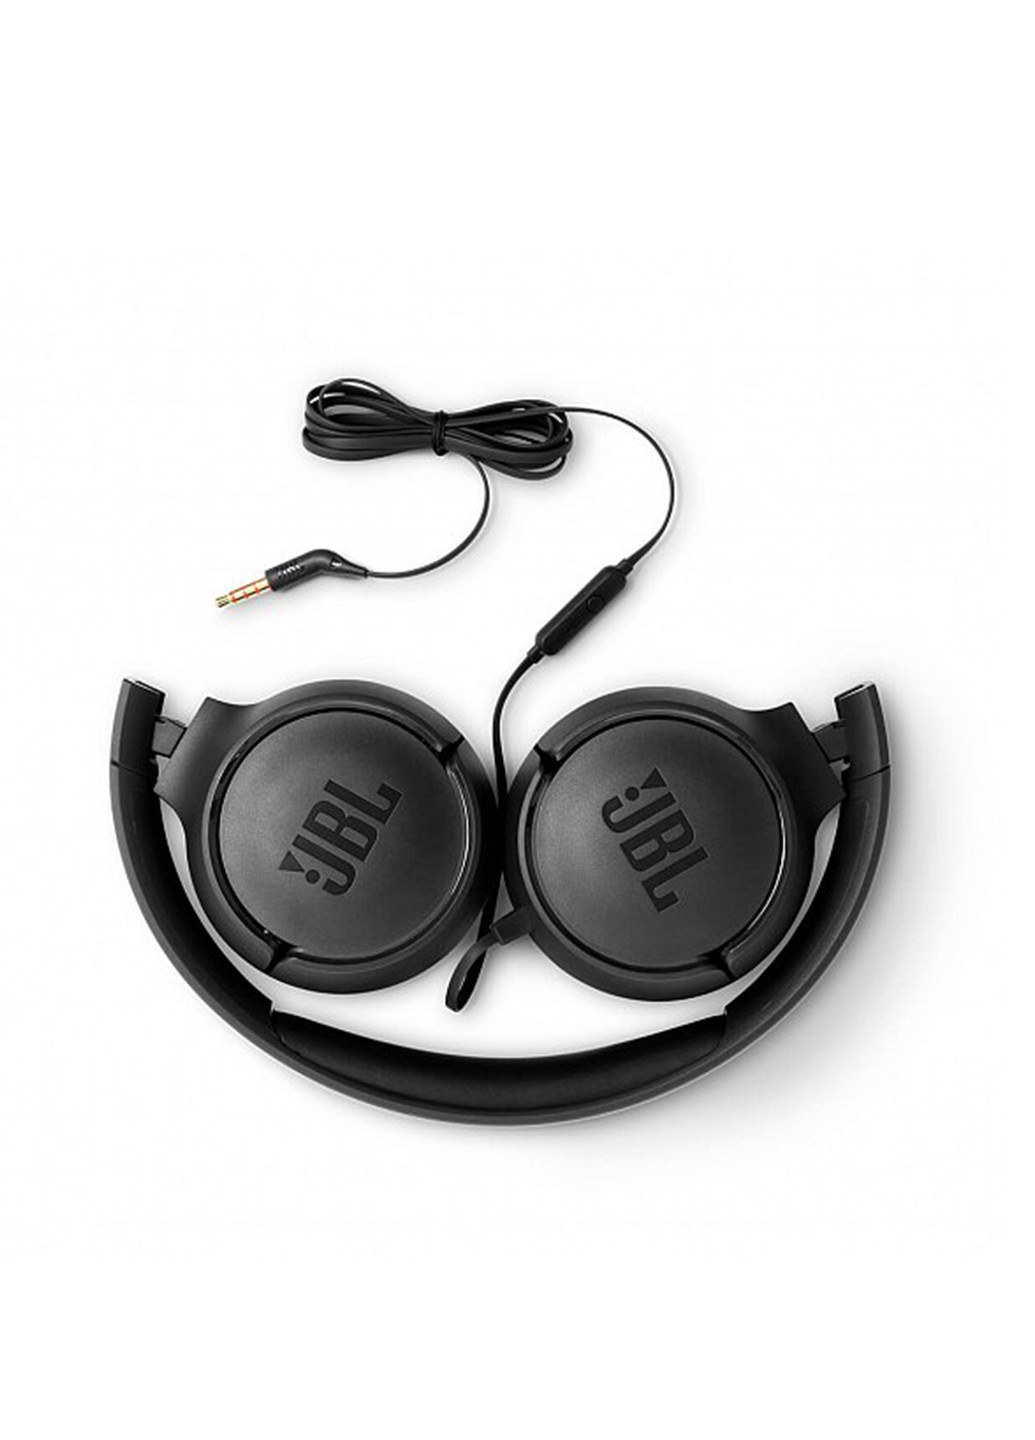 Навушники T500 Black (T500BLK) JBL jblt500 (131629266)